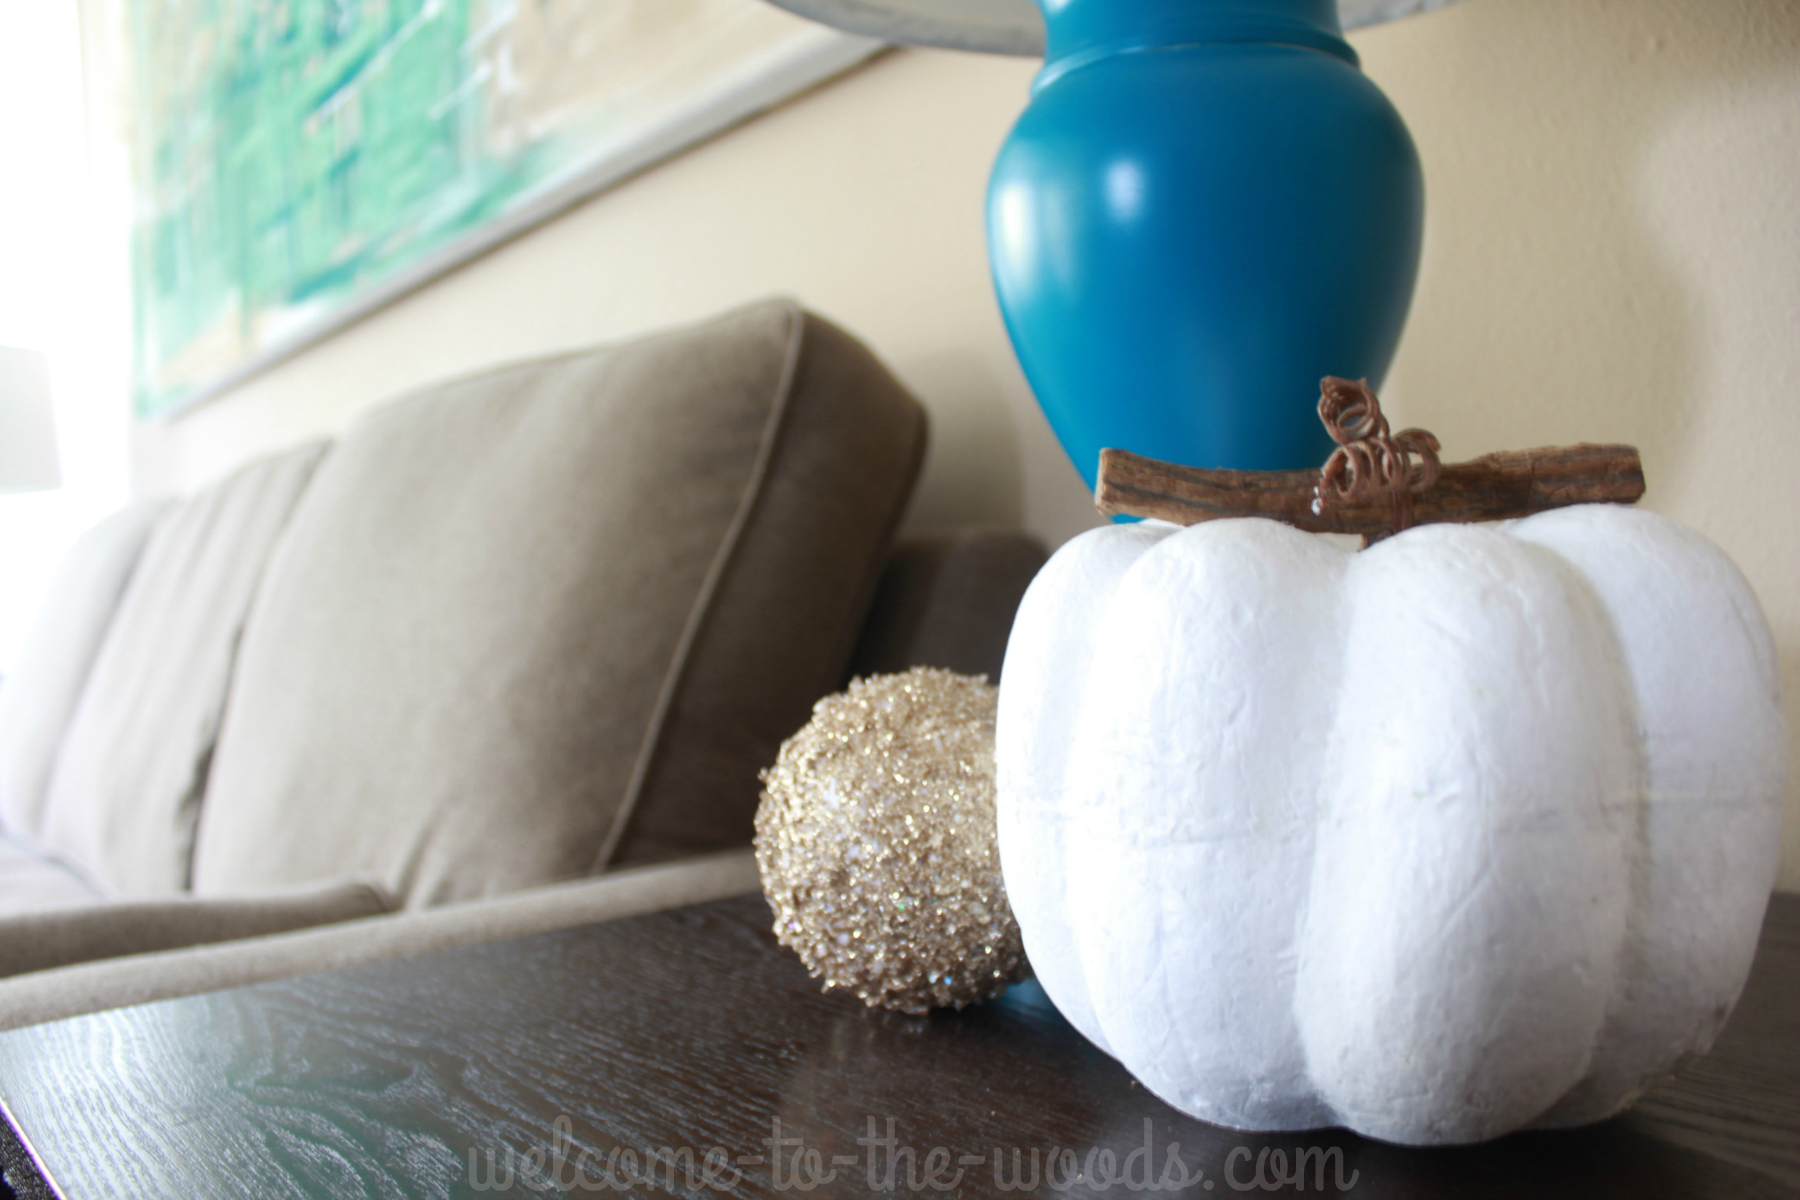 Love white pumpkins! This styrofoam pumpkin is great autumn decor.